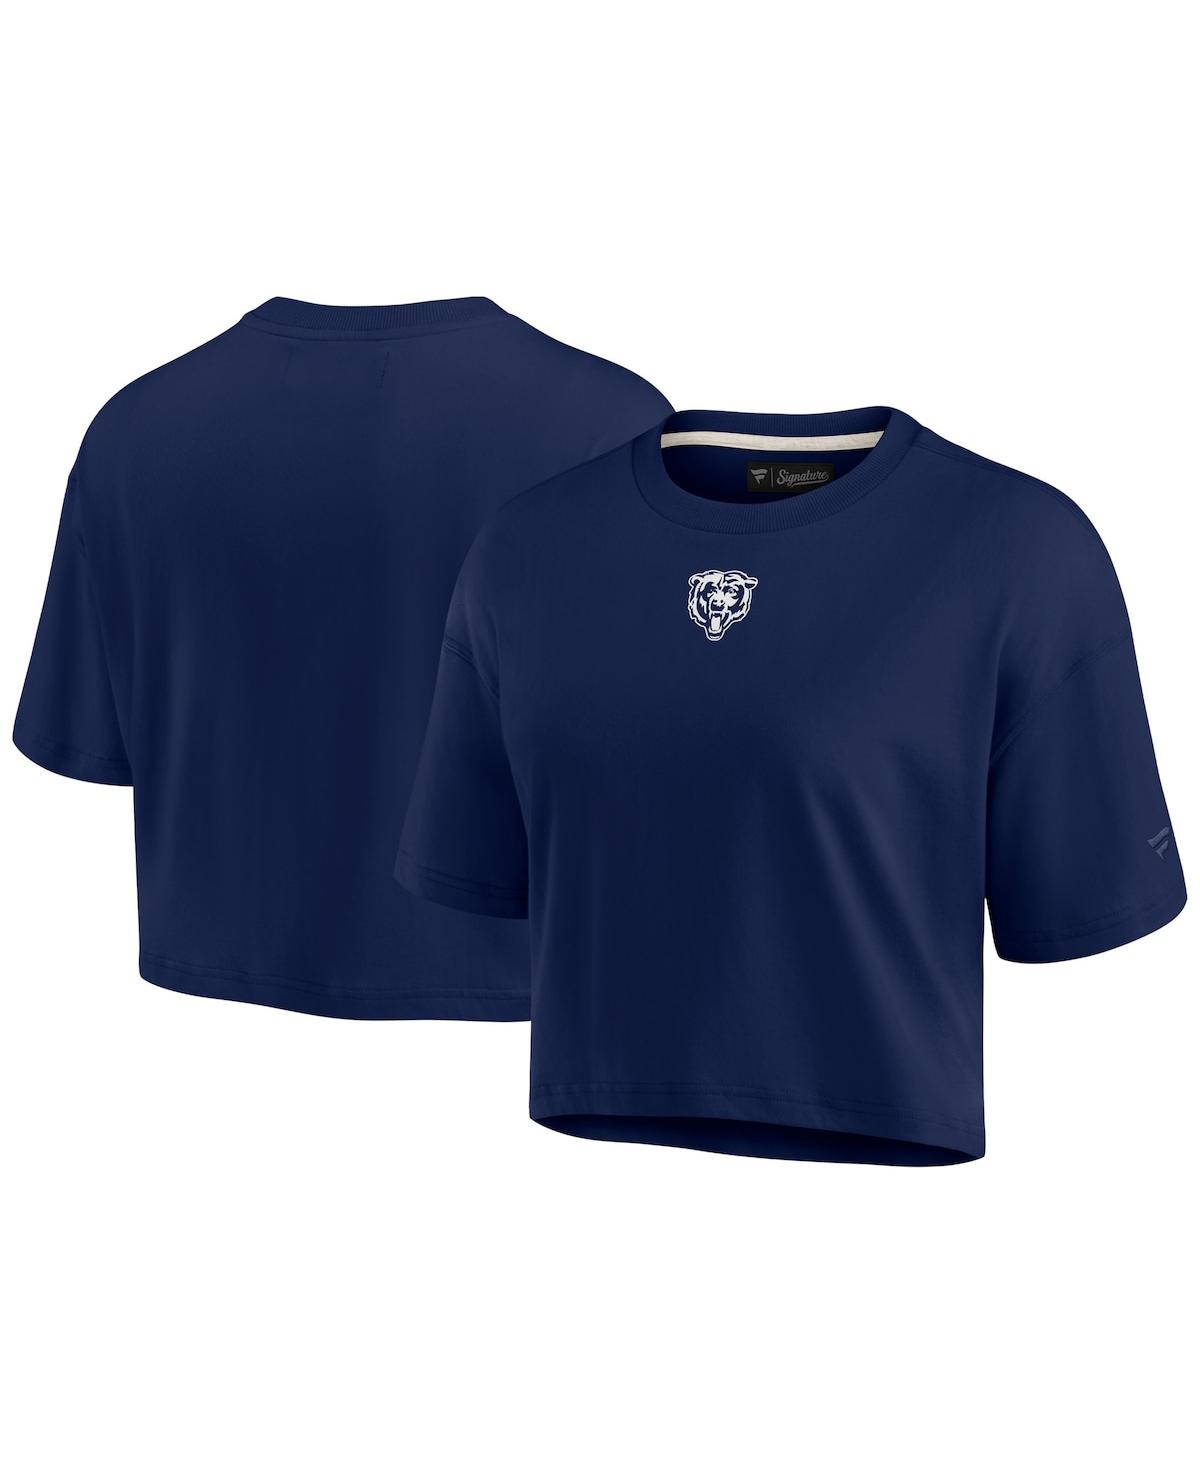 Women's Fanatics Signature Navy Chicago Bears Super Soft Short Sleeve Cropped T-shirt - Navy